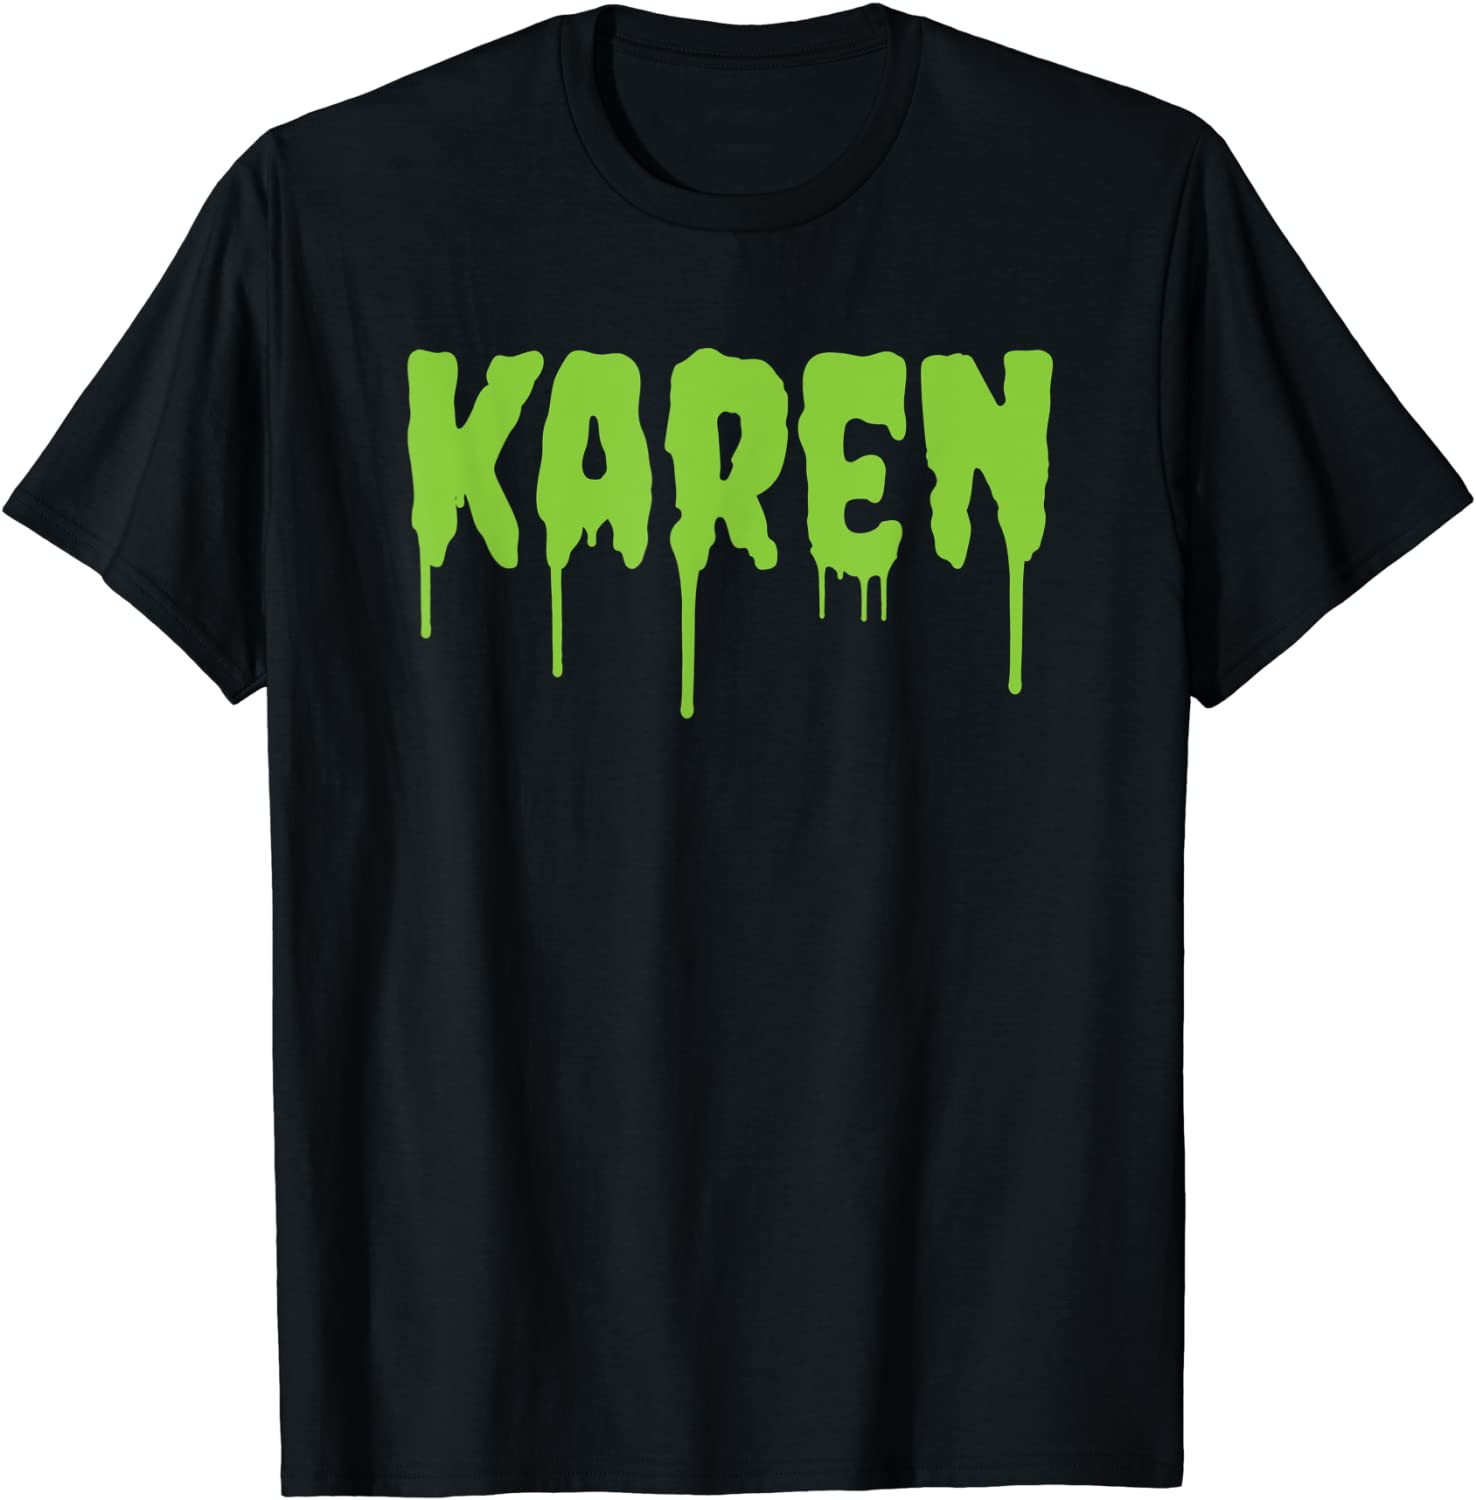 Funny Halloween Costume - Scary Karen T-Shirt